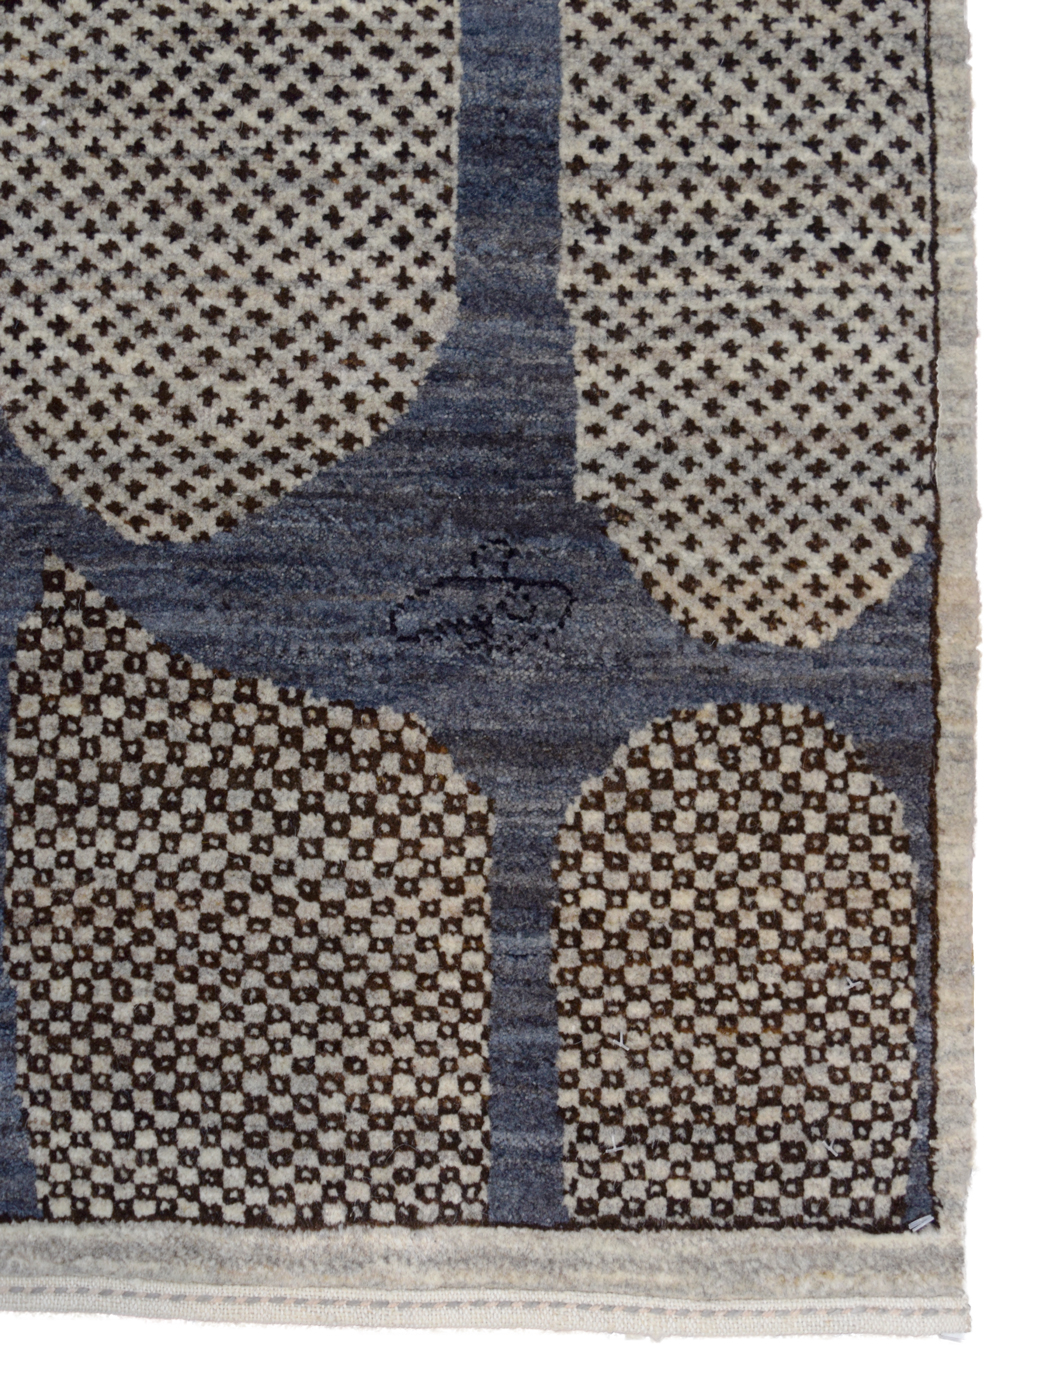 Strata – Architectural Modern Persian Carpet – Gray-Brown, Cream Wool - corner photo with Orley Shabahang Logo